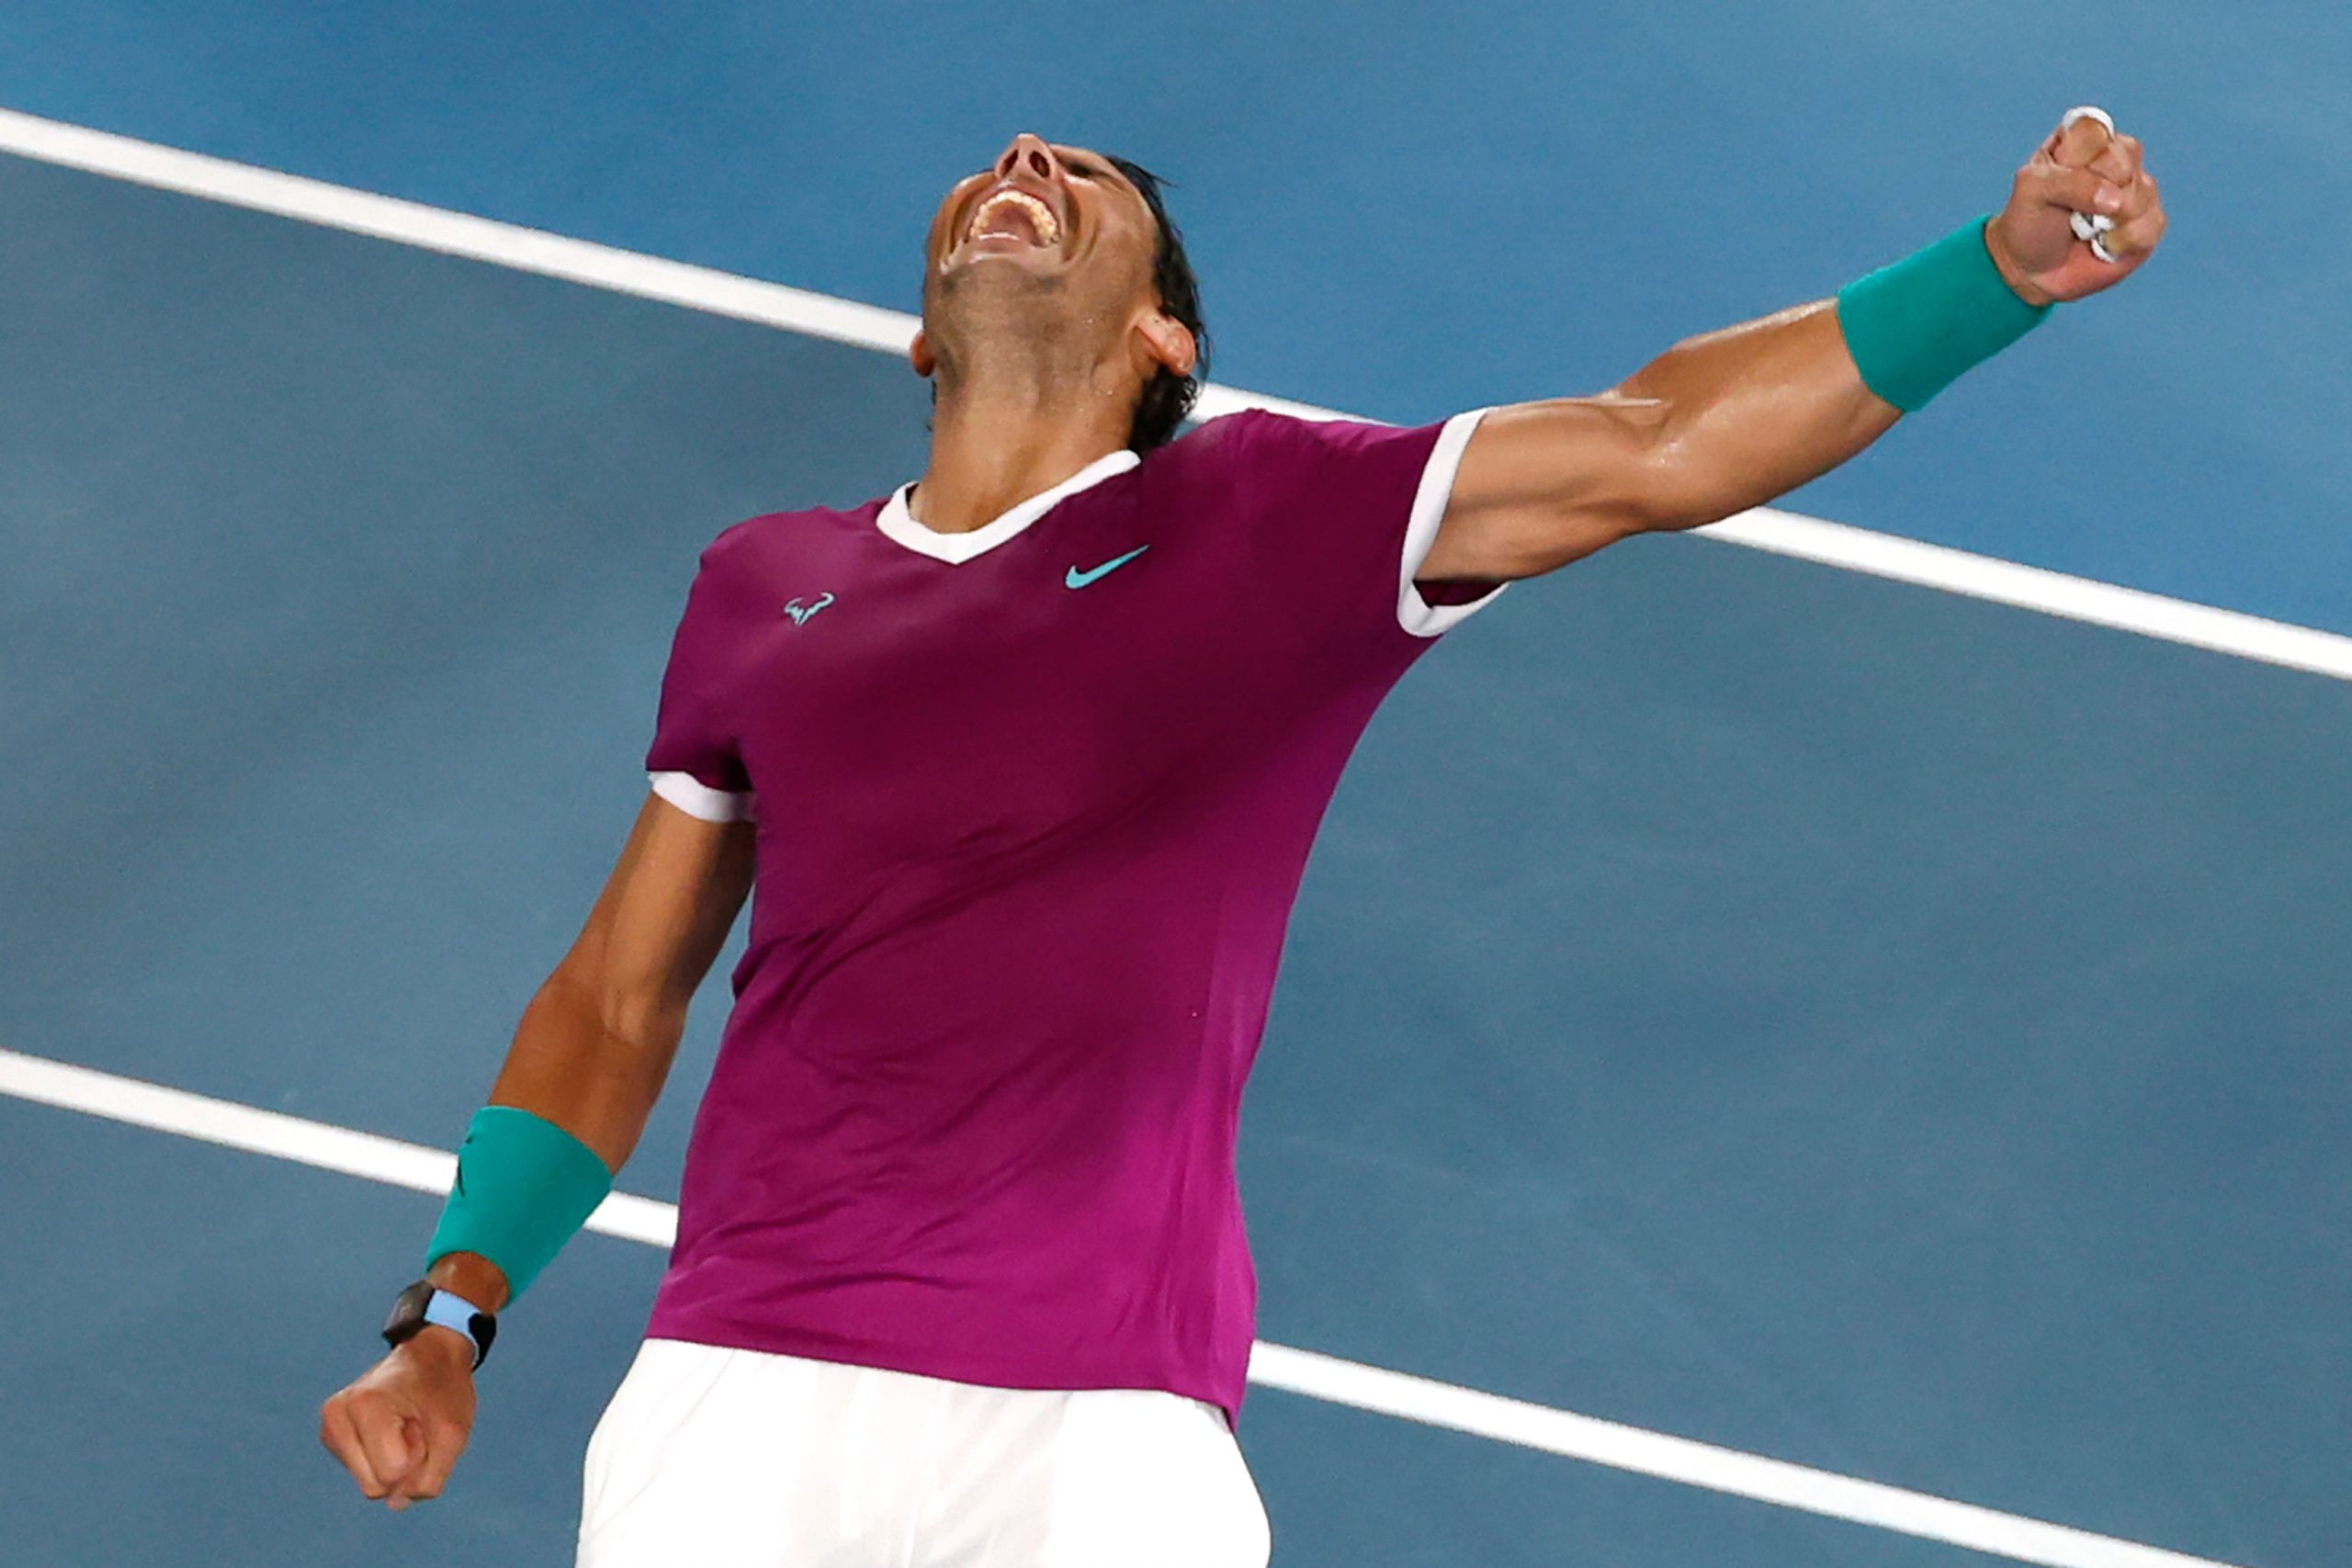 Australian Open 2022: Internet users react to Rafael Nadal sweating, share memes